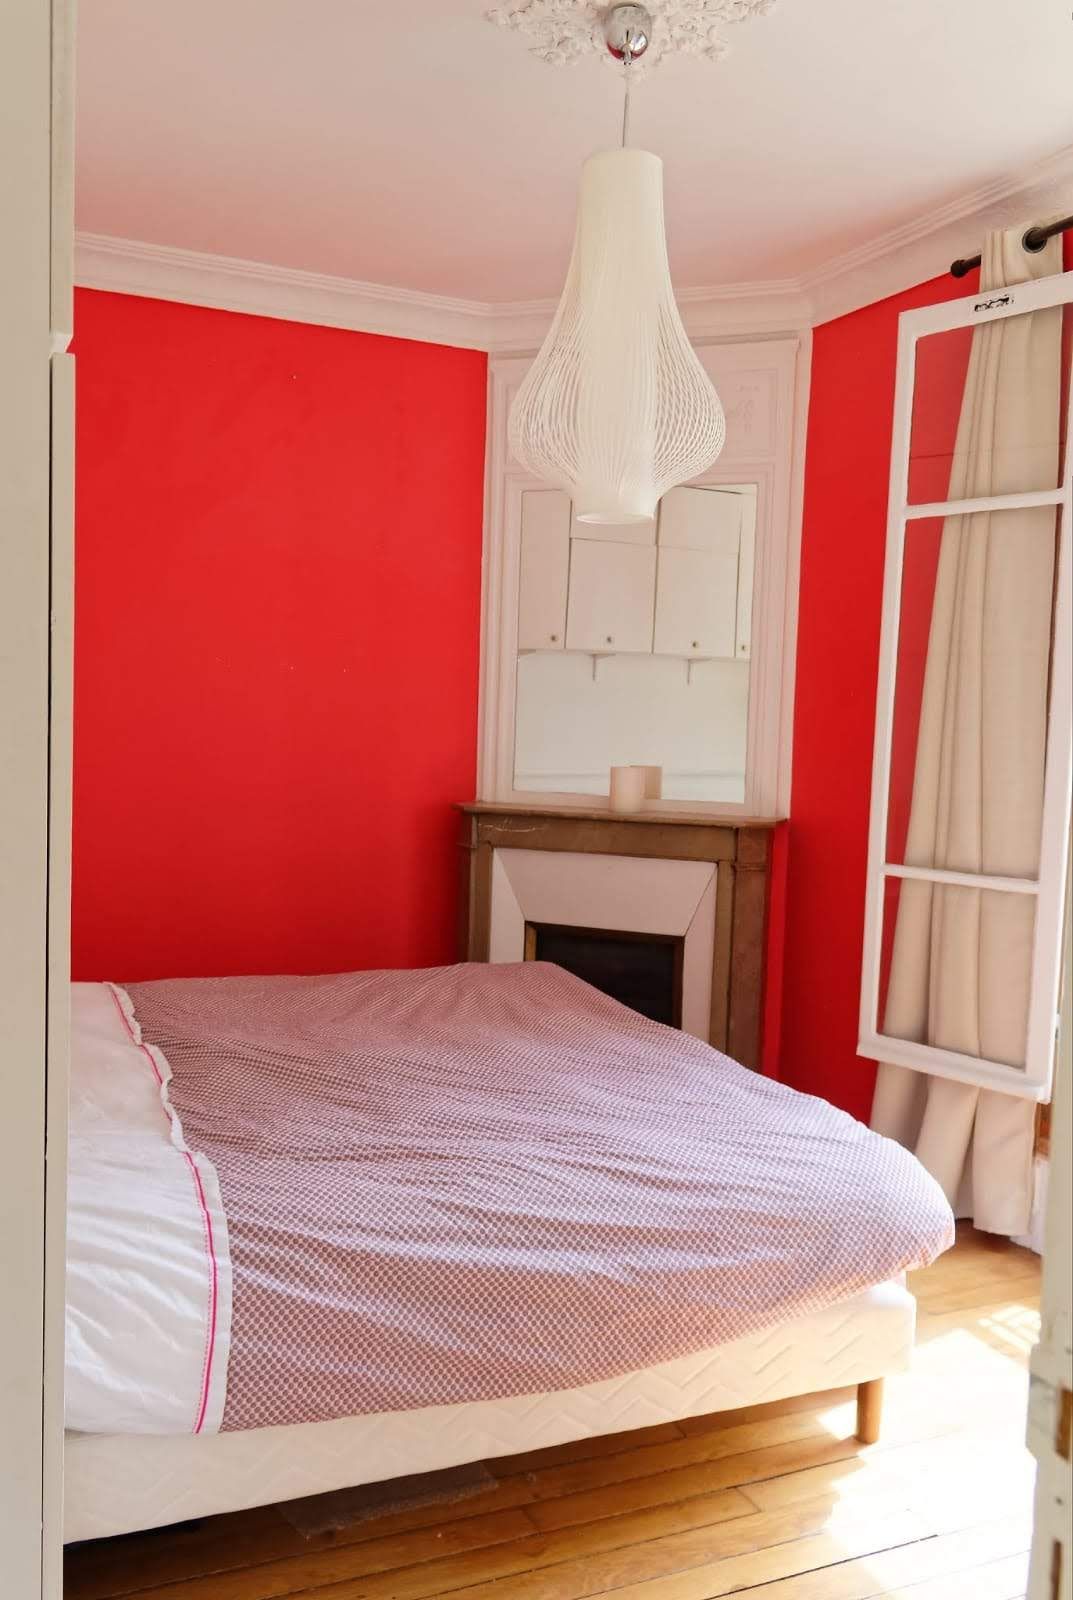 Fully refurbished flat (2 bedrooms) in Haussemann house in Montmartre area in quiet street